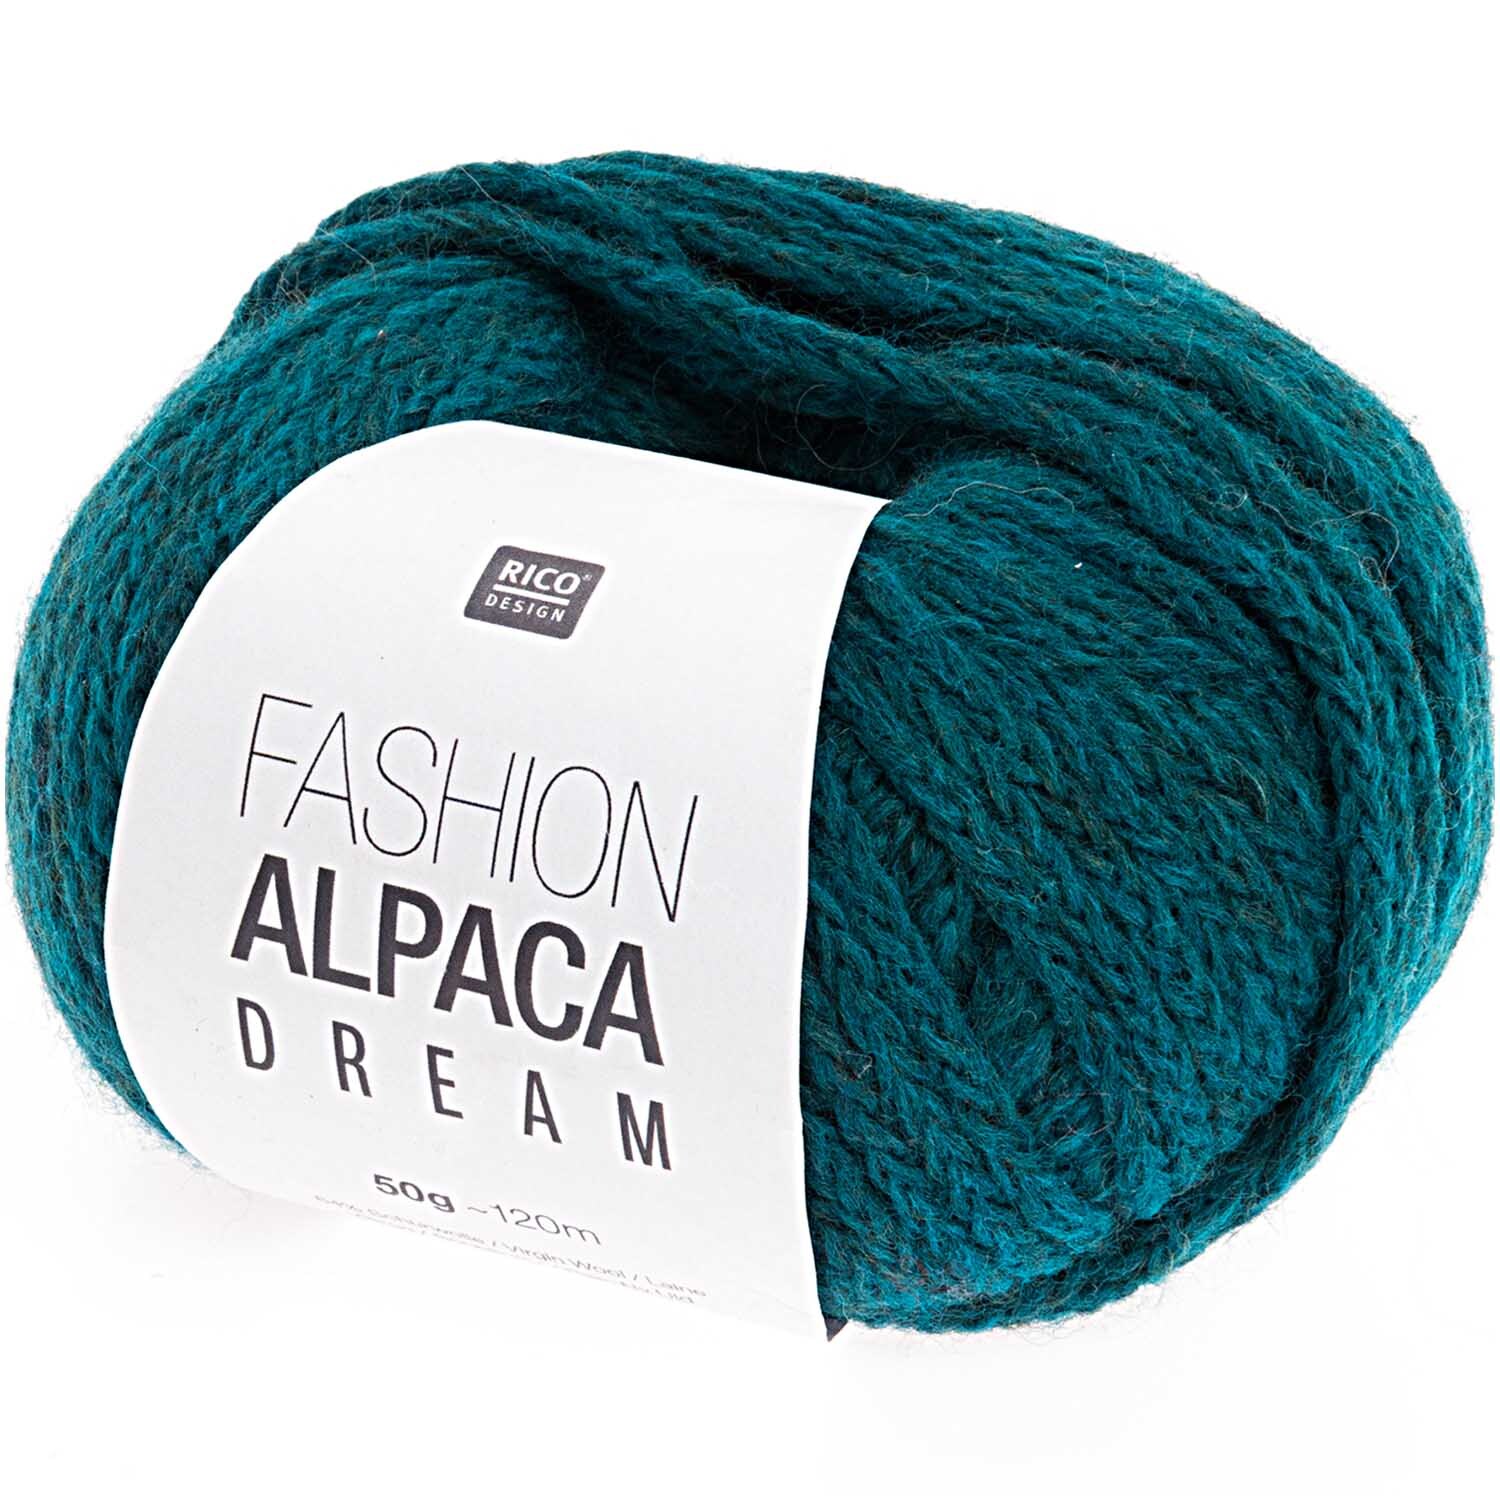 Fashion Alpaca Dream